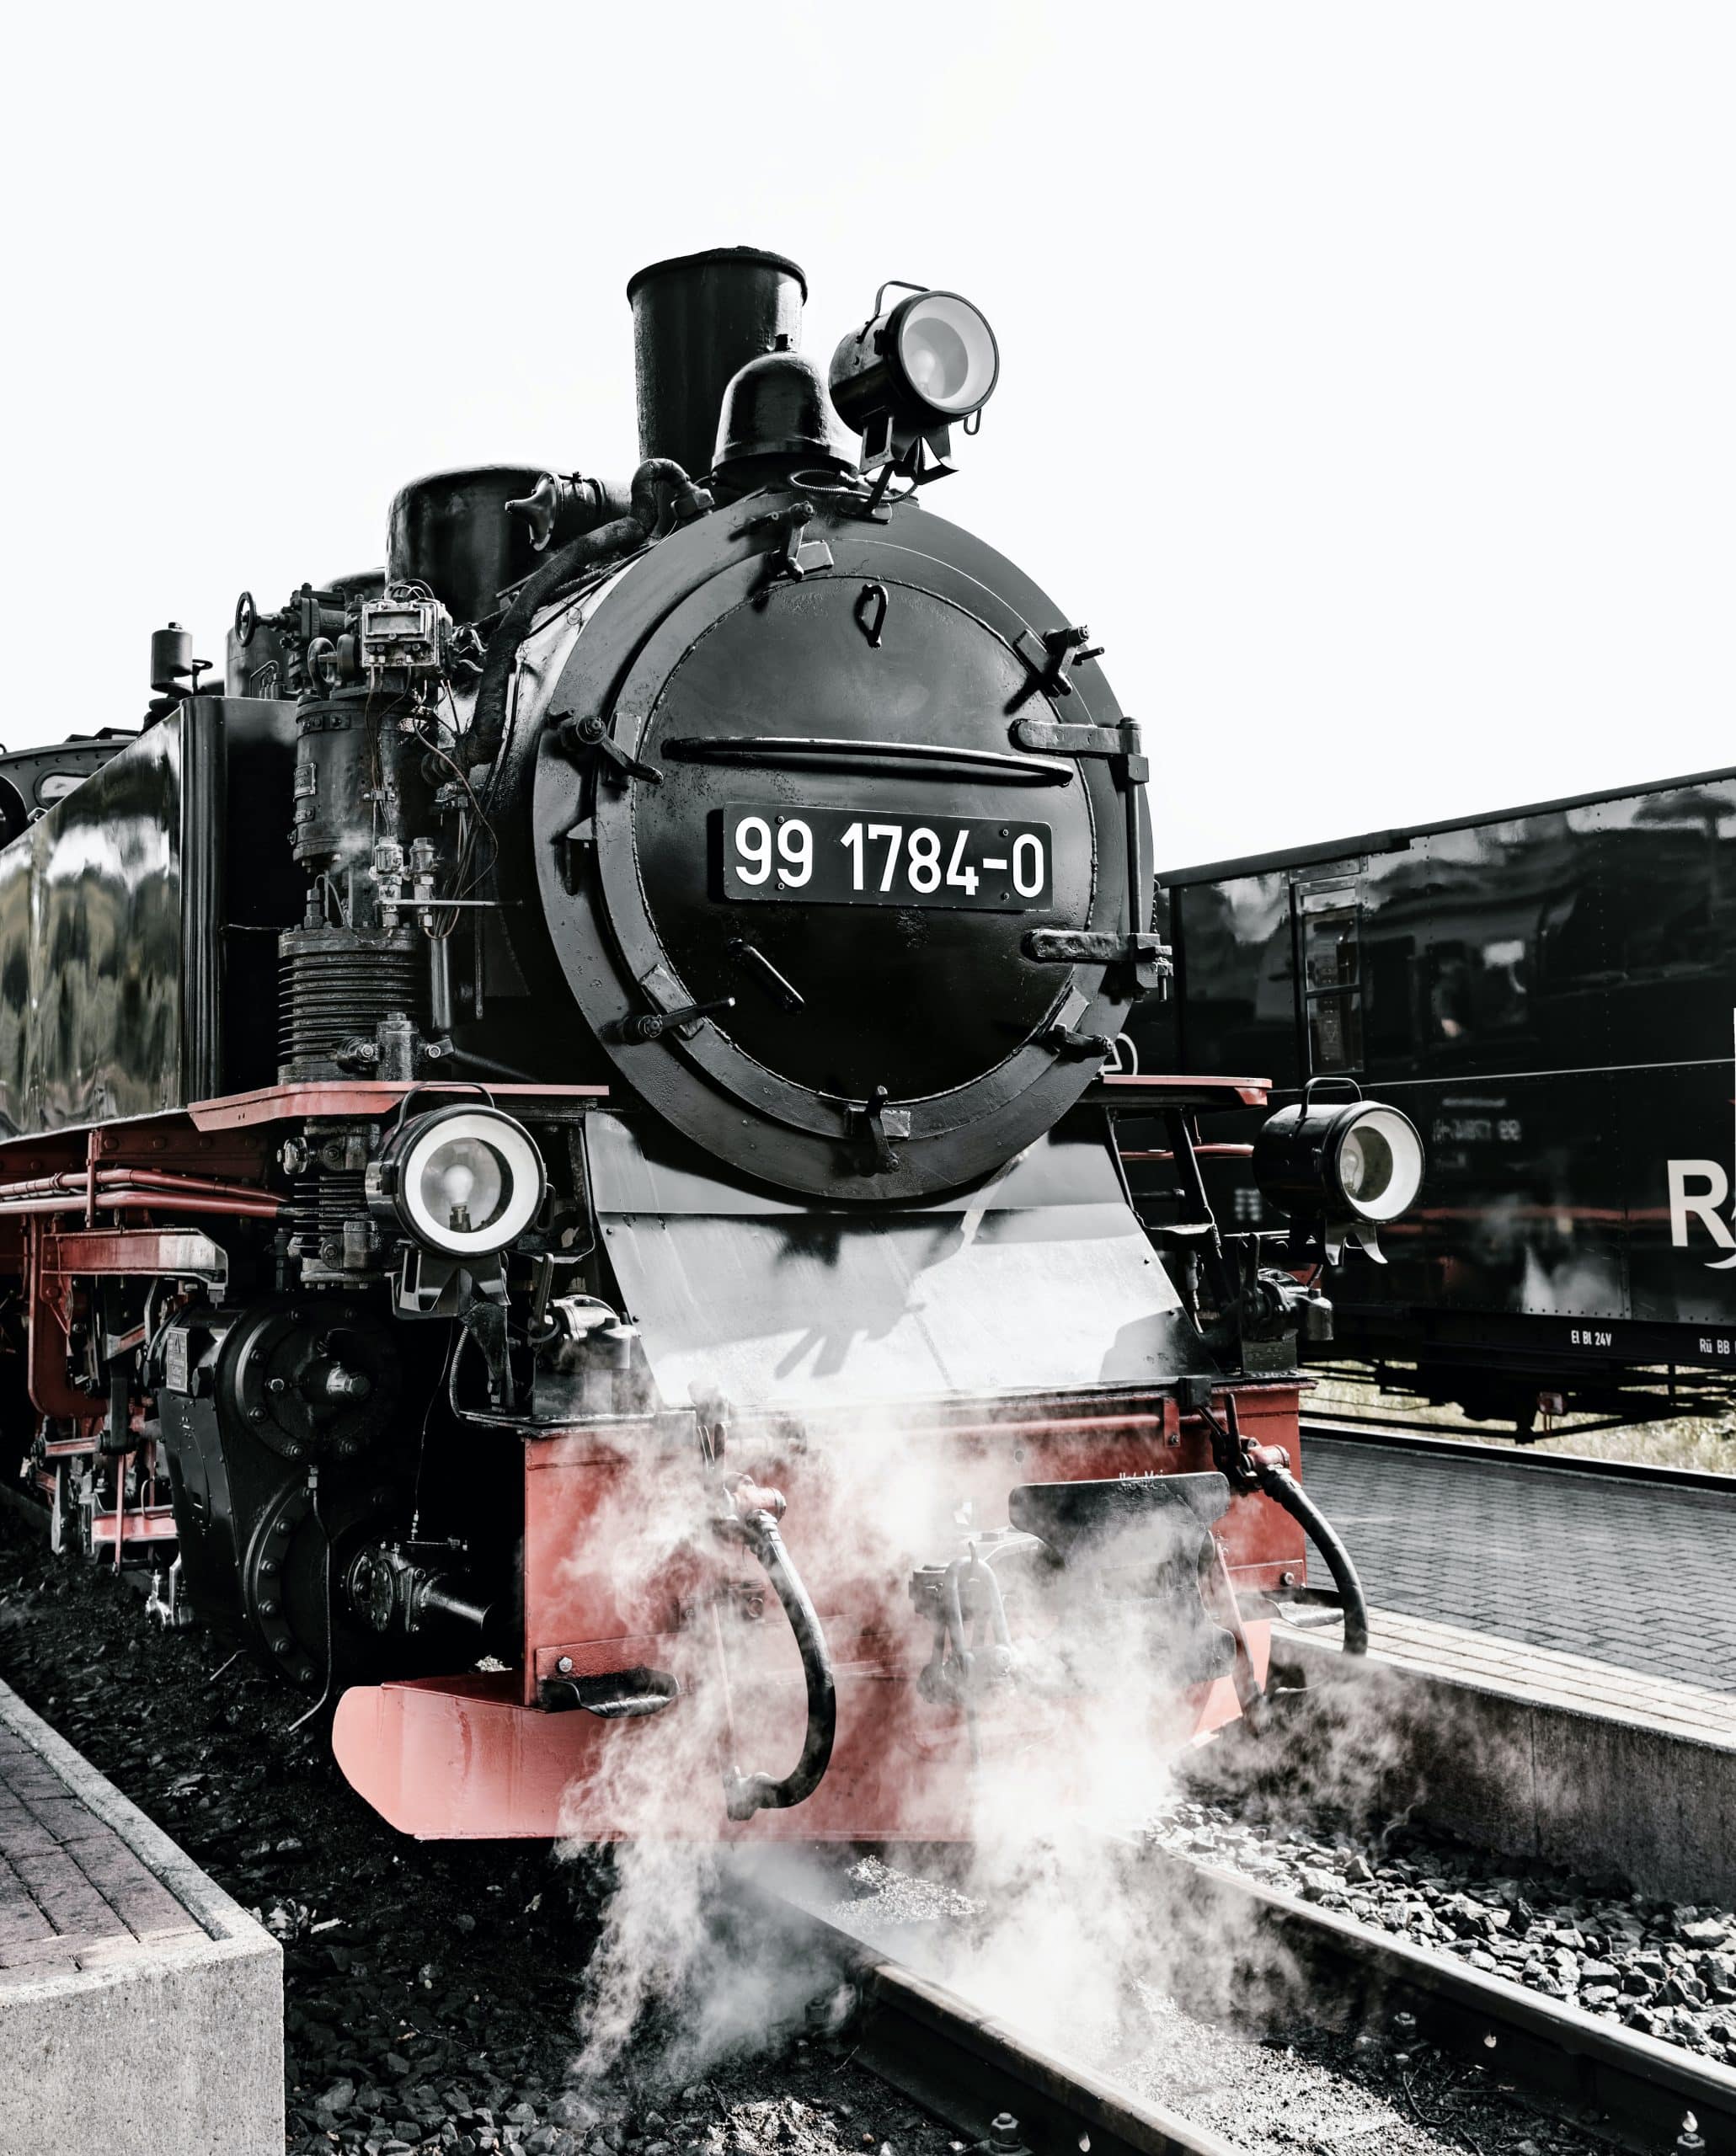 A close up photo of a steam train